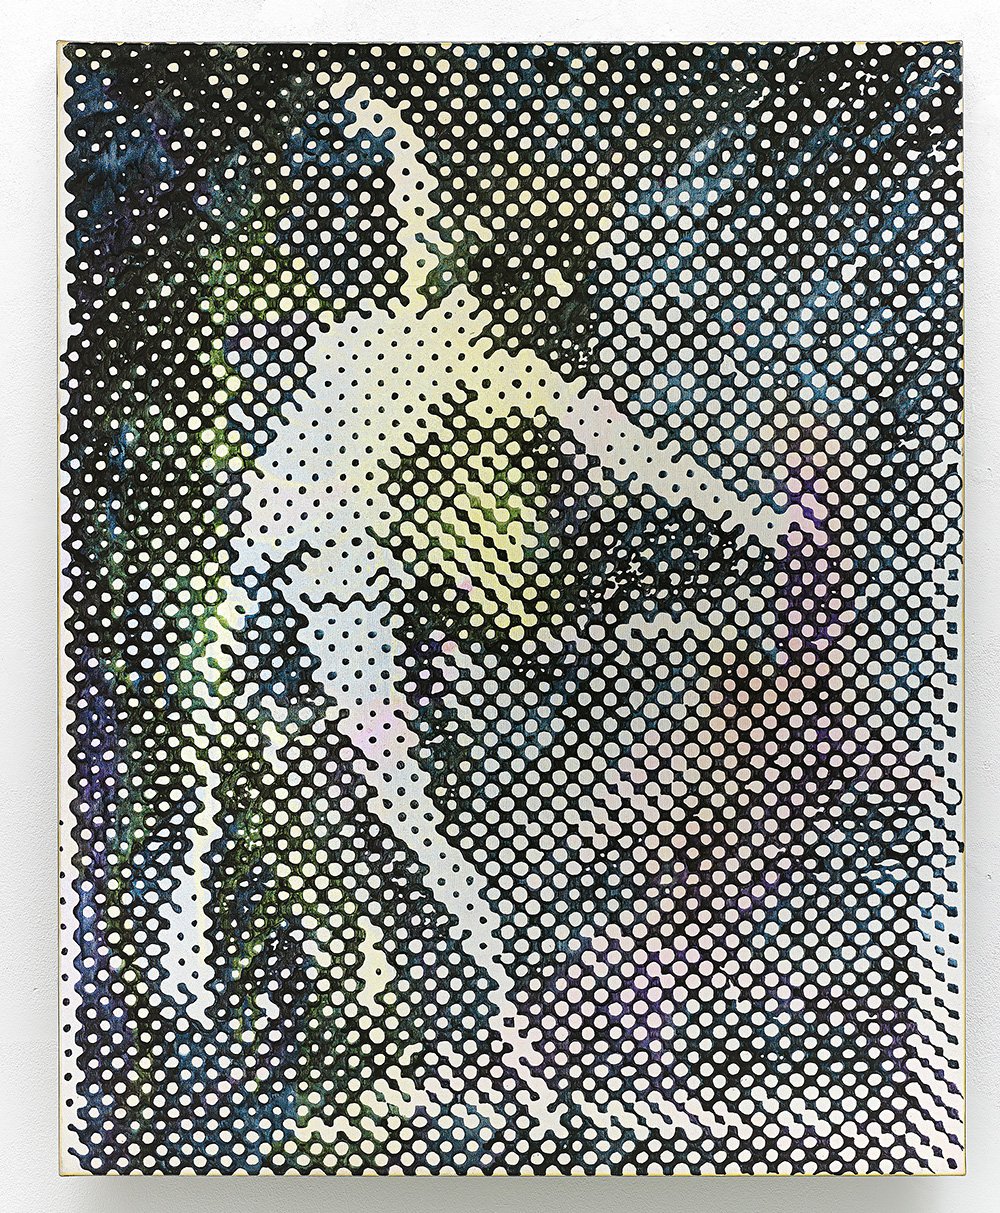 Зигмар Польке. «Танцовщица». 1994. Phillips, эстимейт £2,5–3,5 млн. Фото: Philli